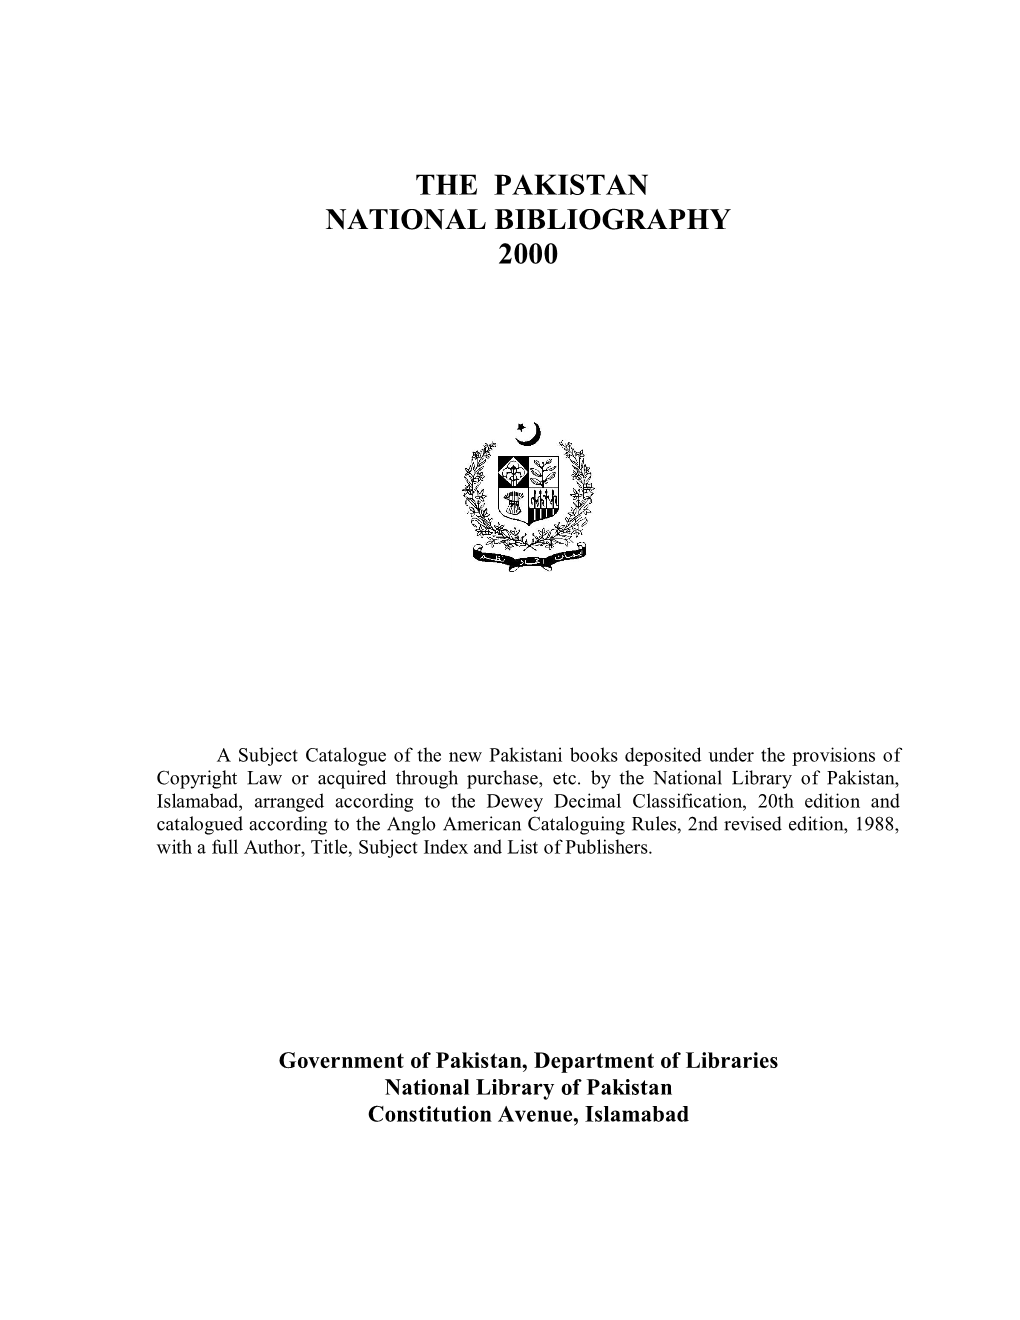 The Pakistan National Bibliography 2000